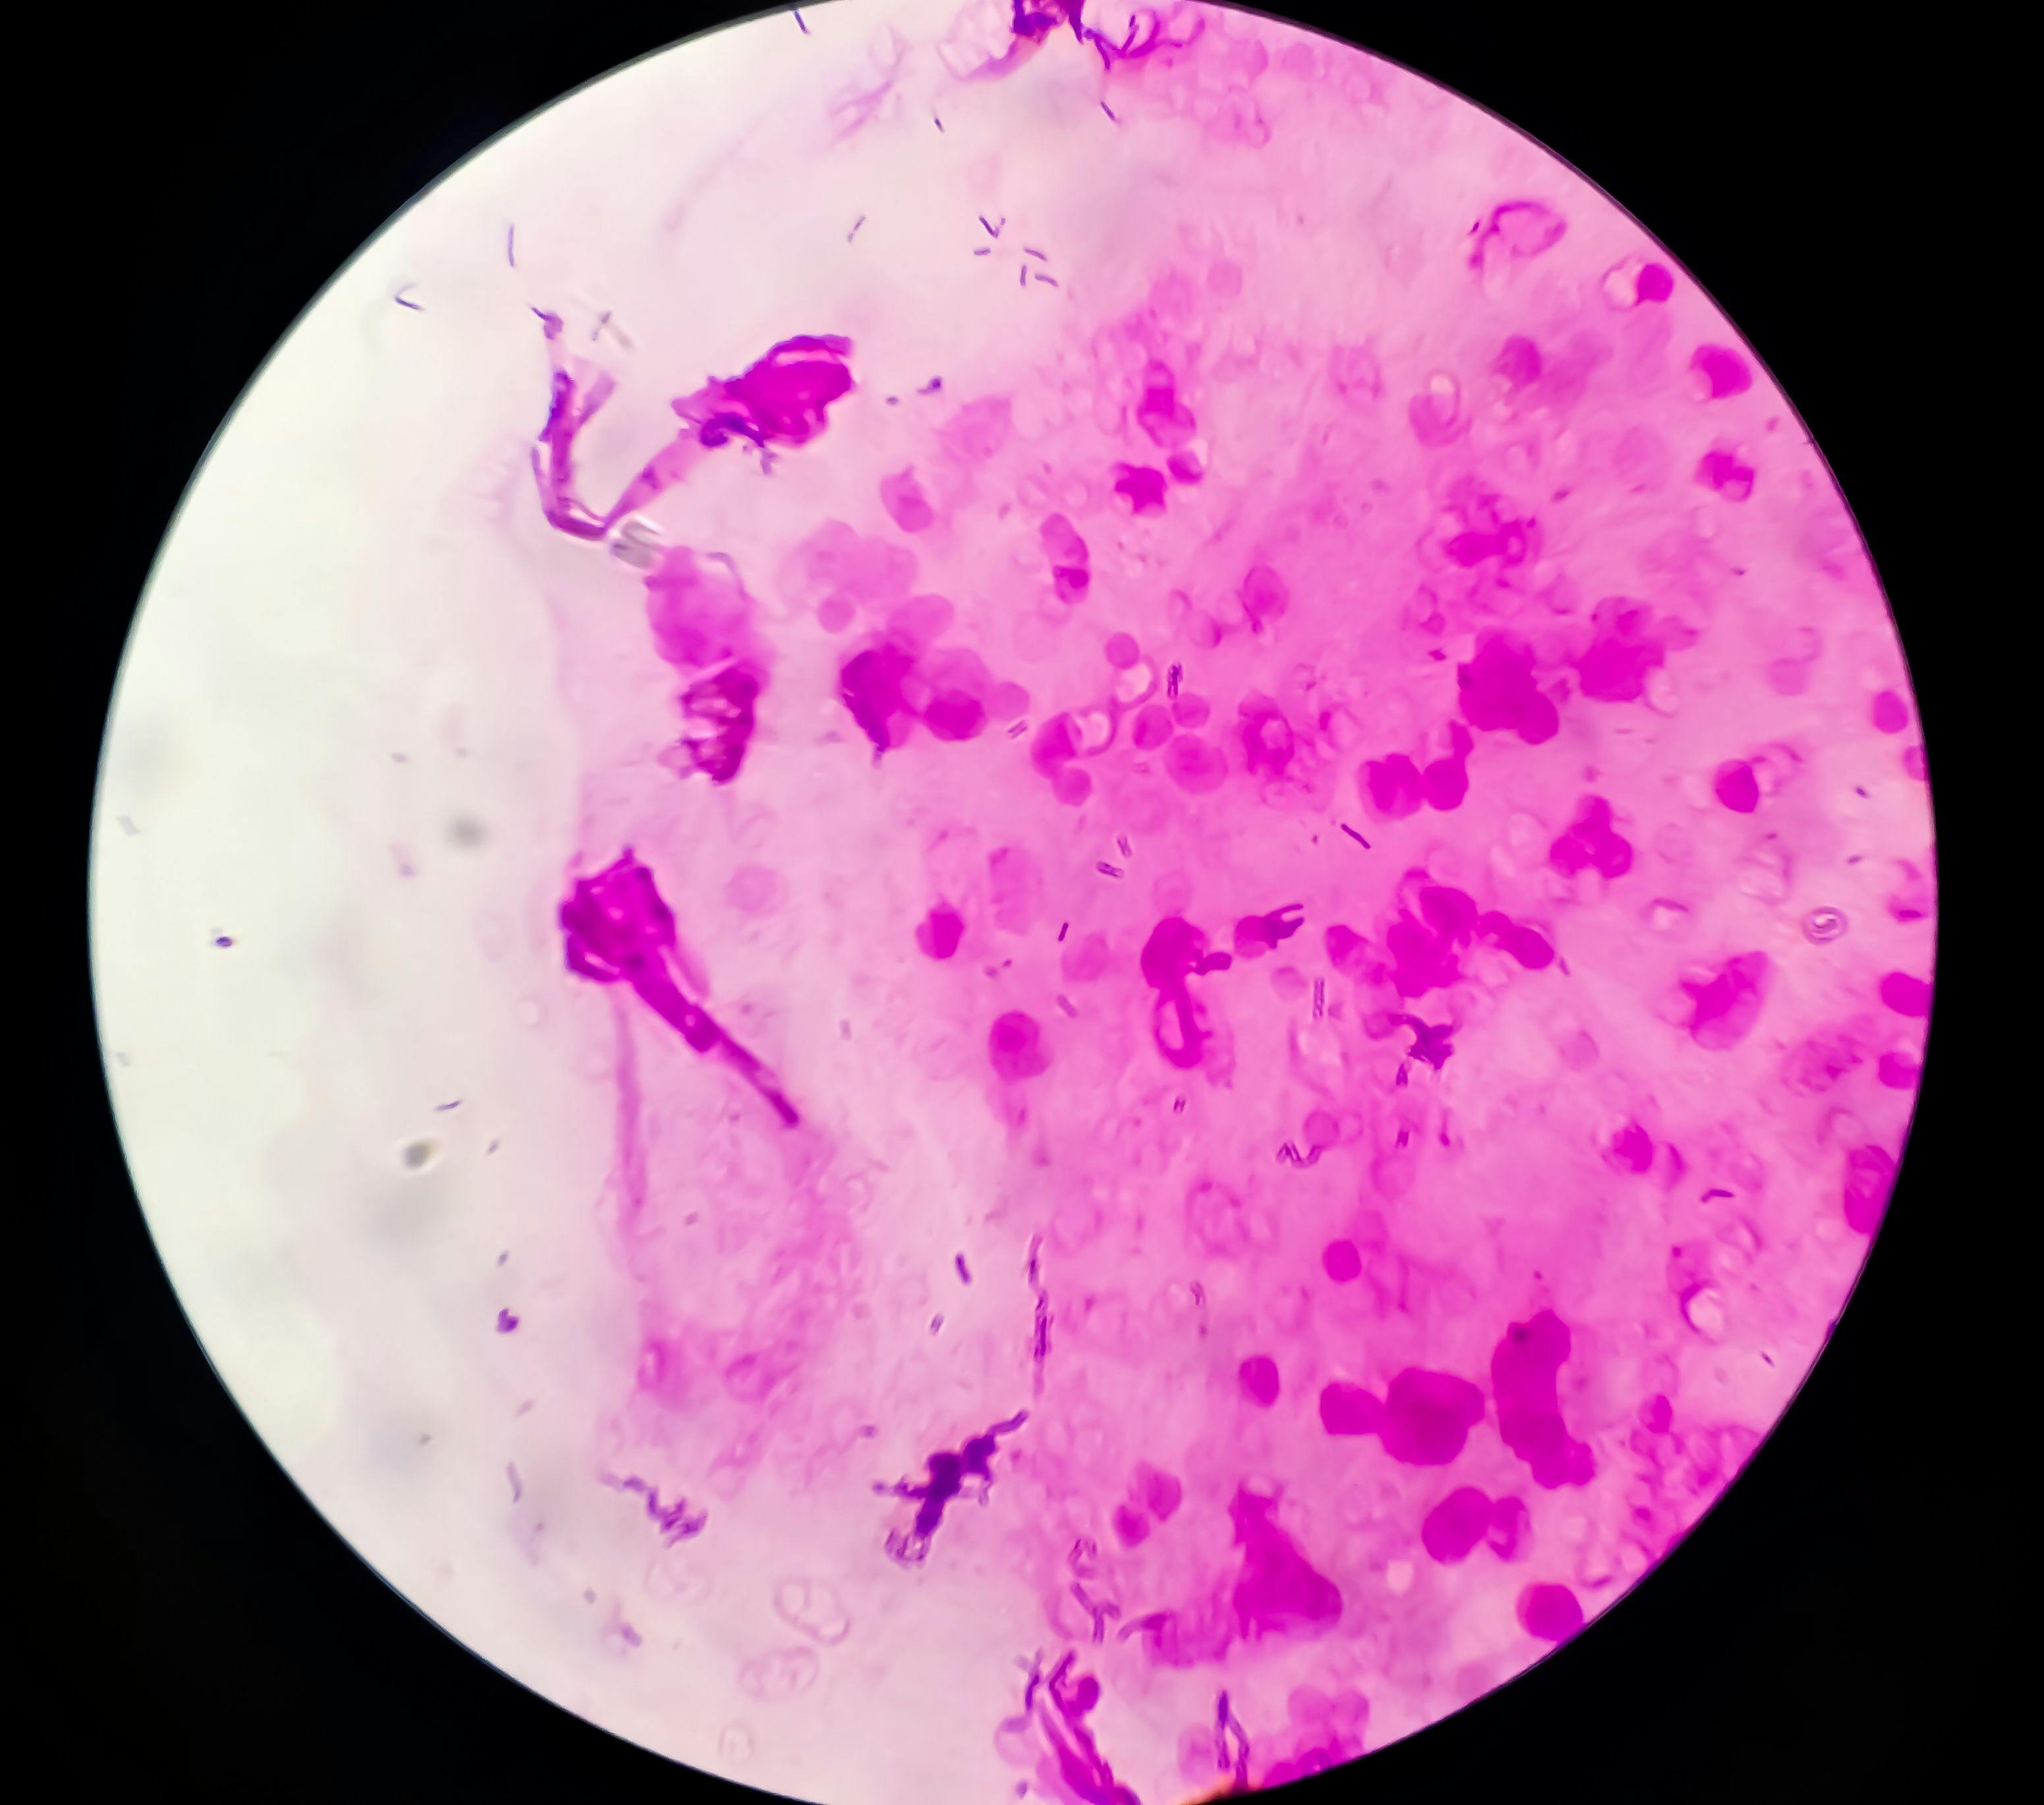 Microscopic view of s aureus bacteria -- Image credit: Arif Biswas | stock.adobe.com